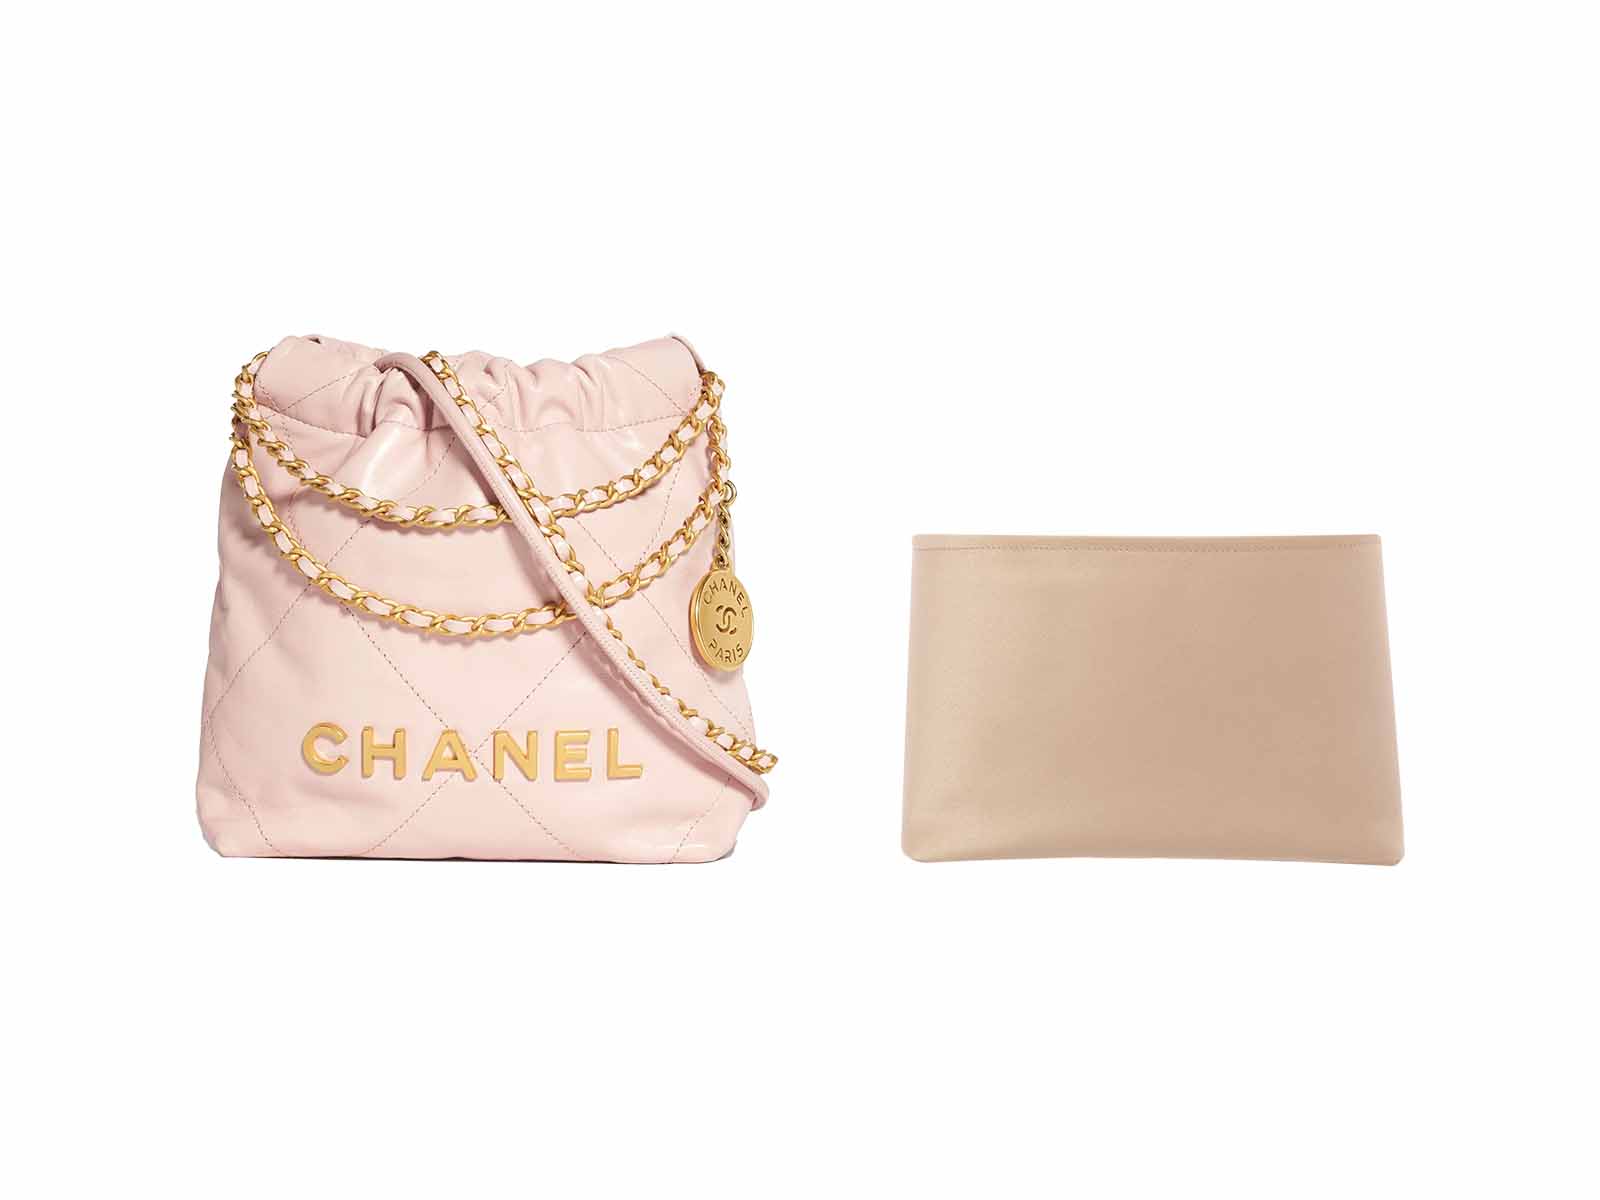 Chanel 22 mini 專用喬莉包內袋